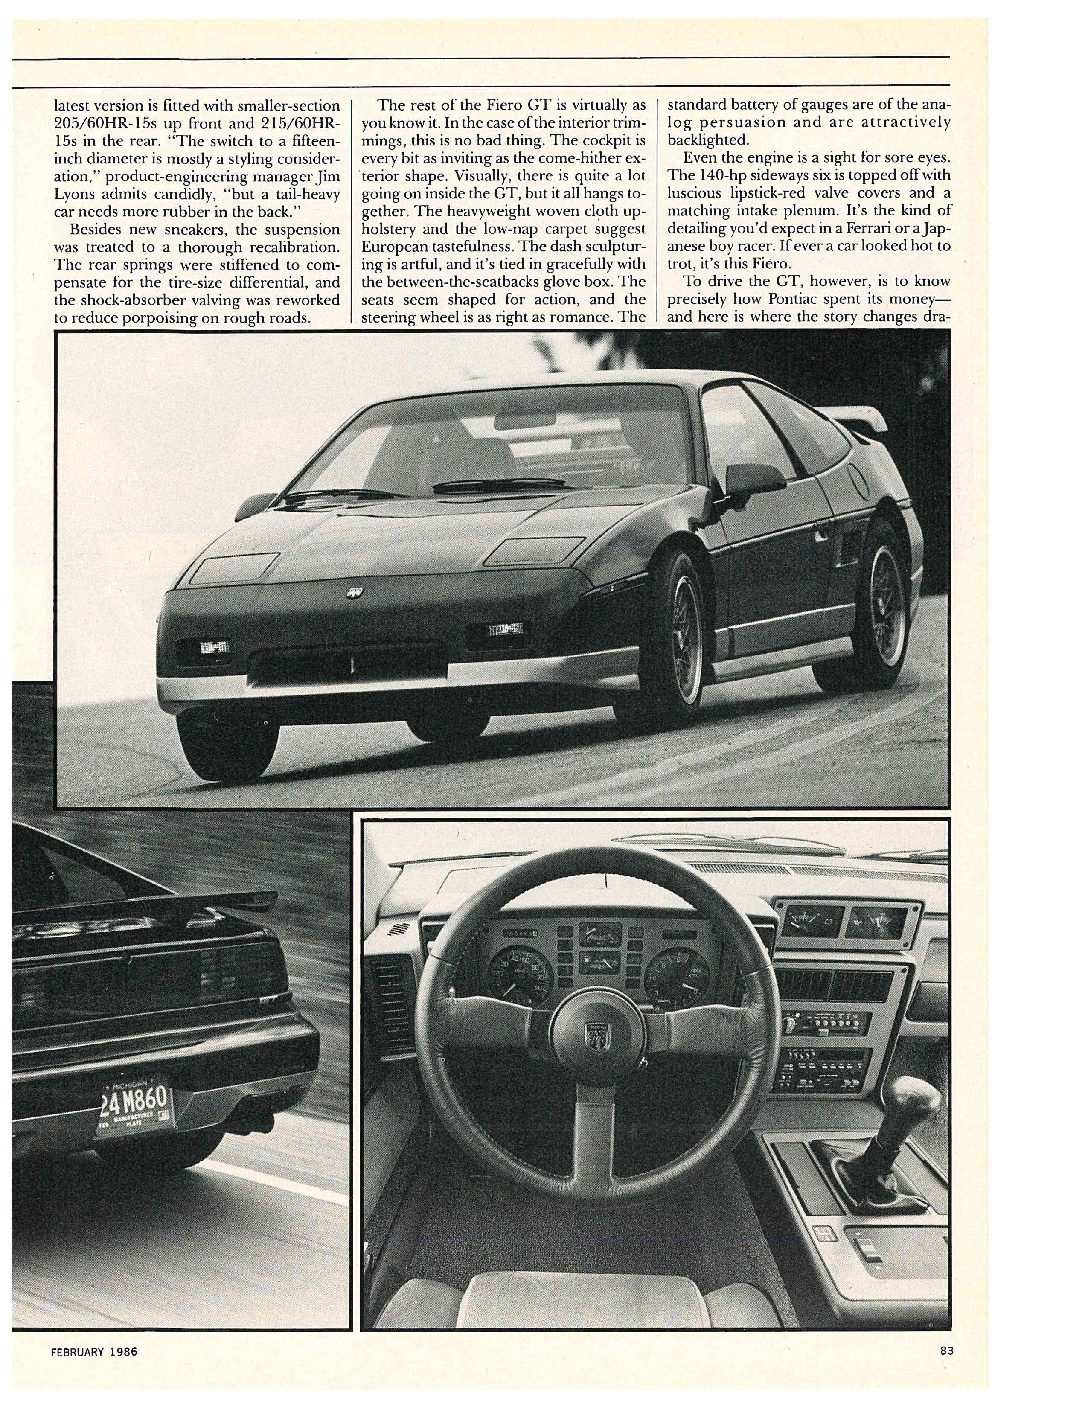 Pontiac Fiero GT performance review page 2.